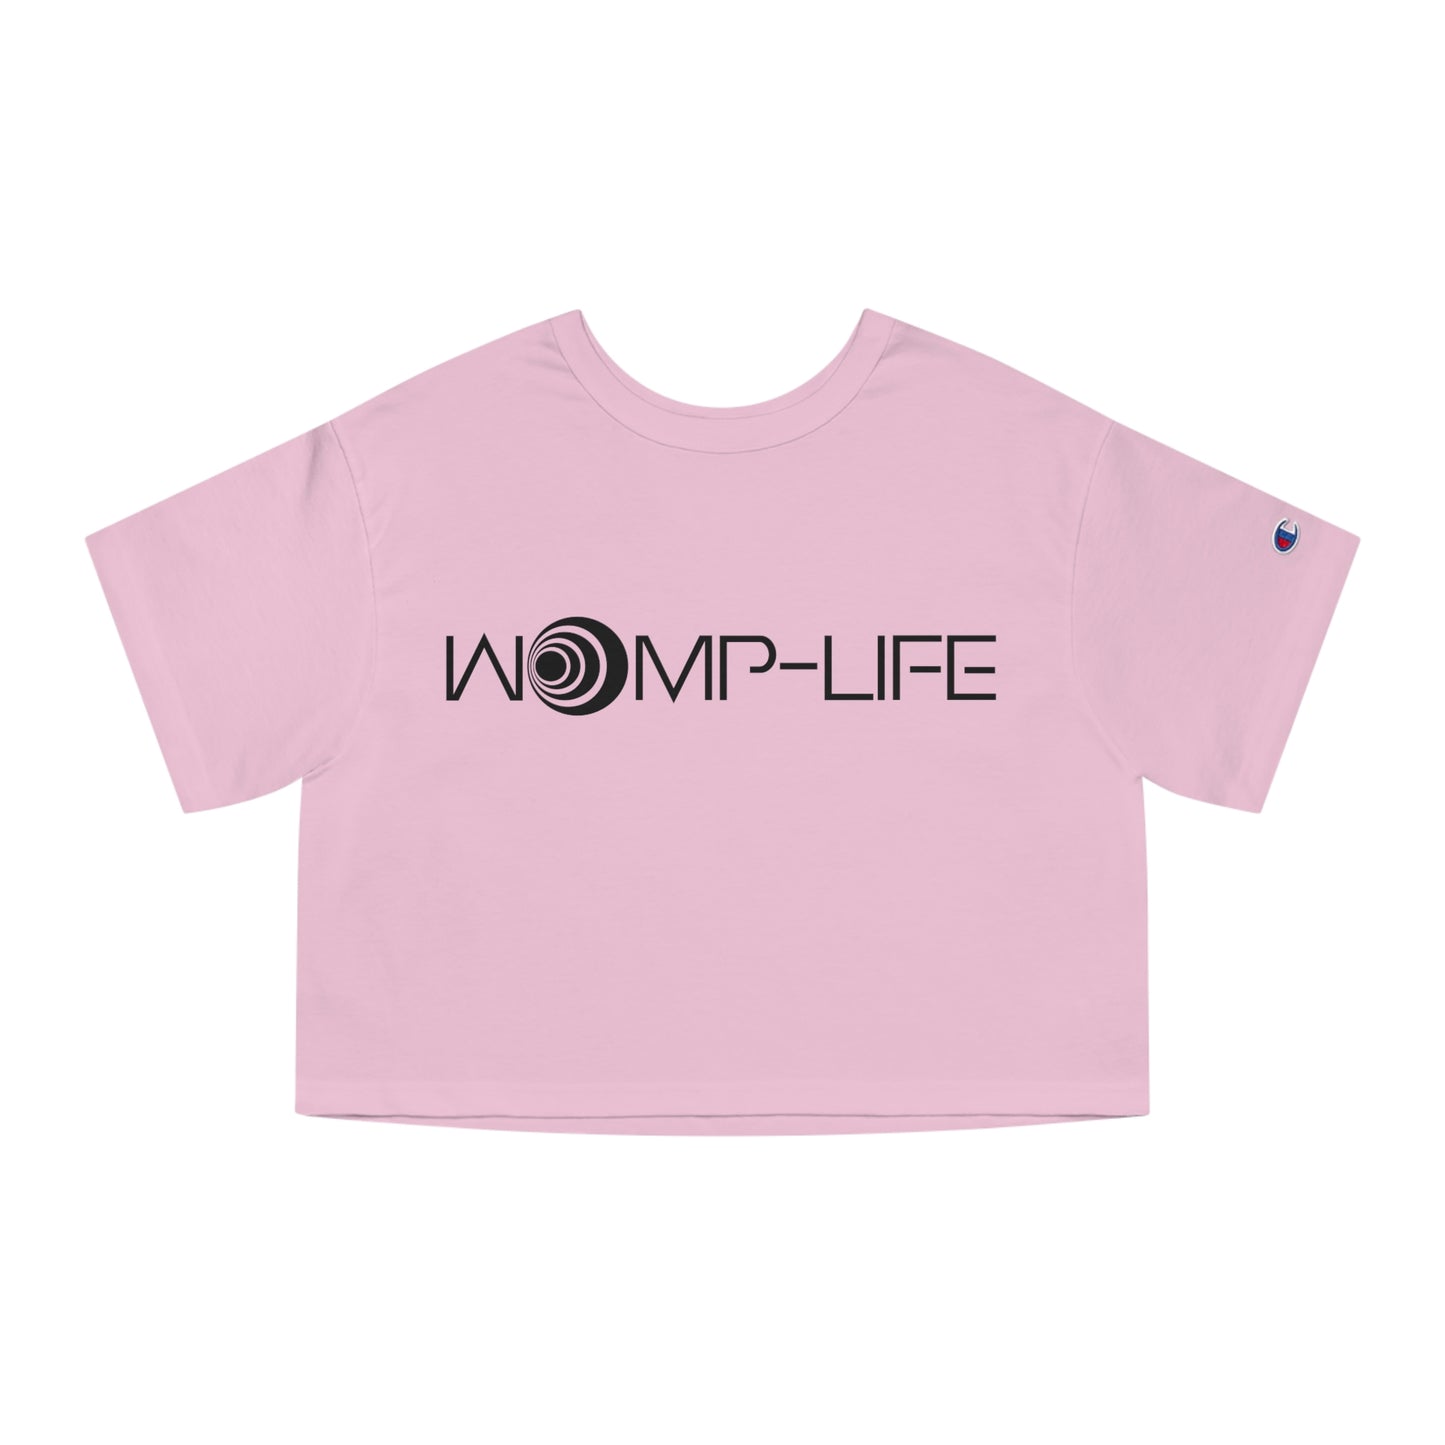 Womp-Life Champion Women's Heritage Cropped T-Shirt